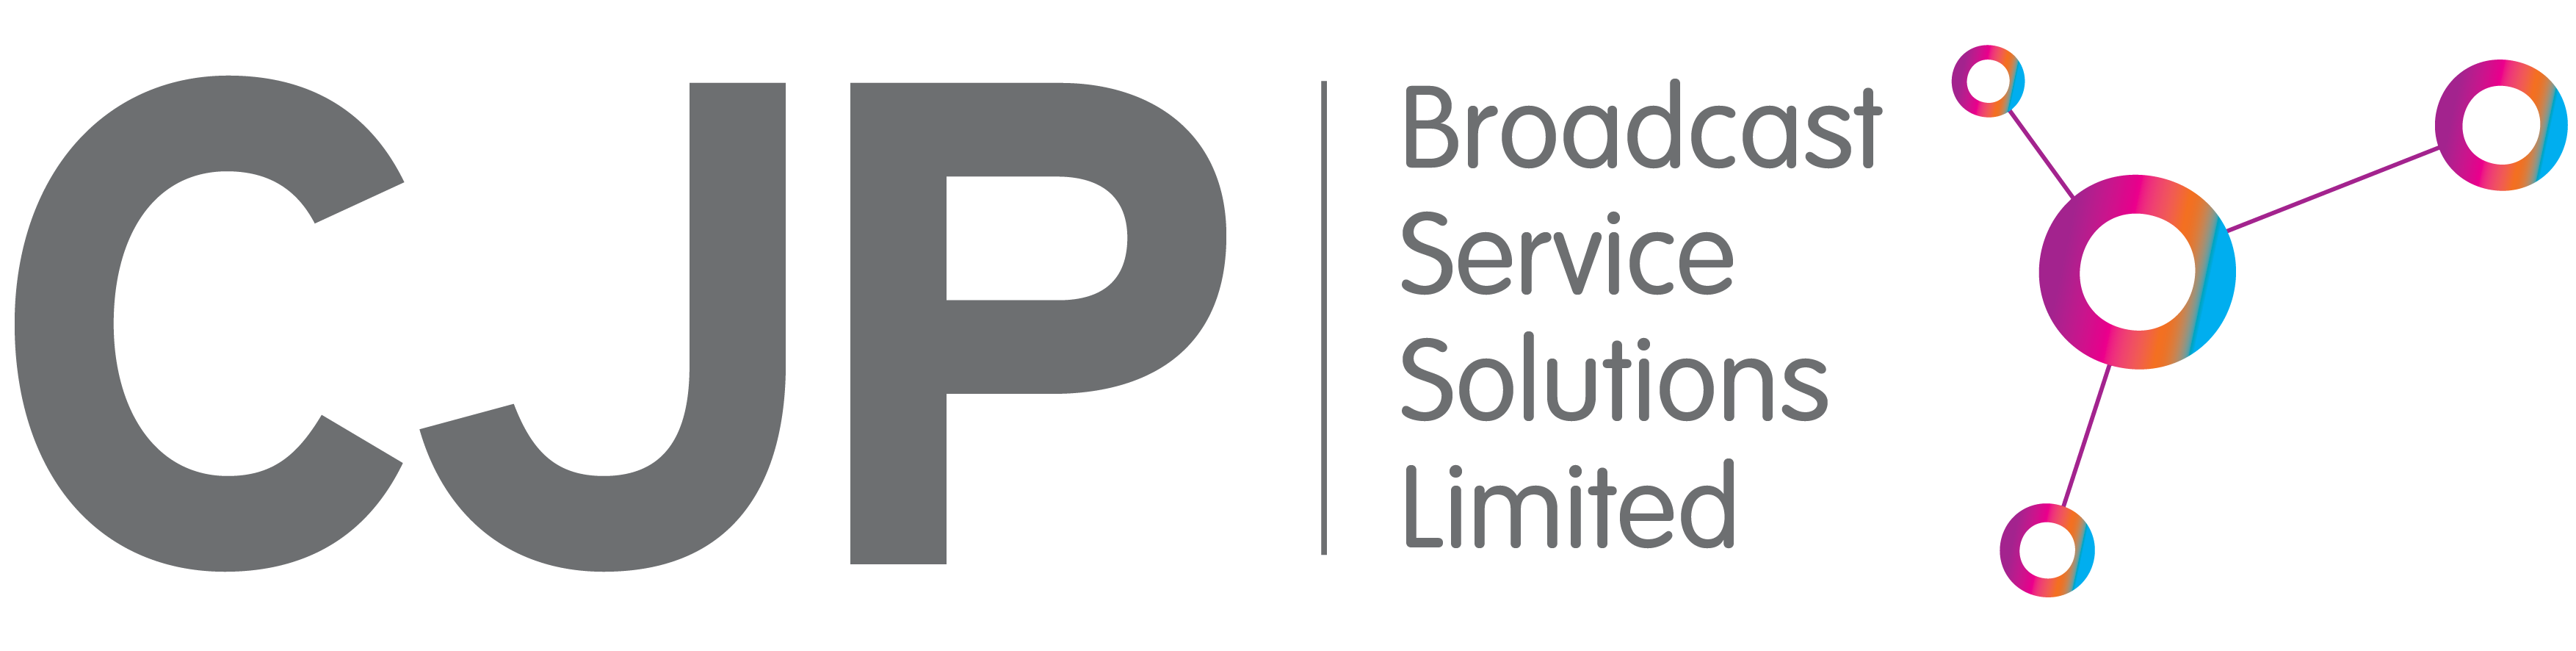 CJP Broadcast Service Solutions Ltd